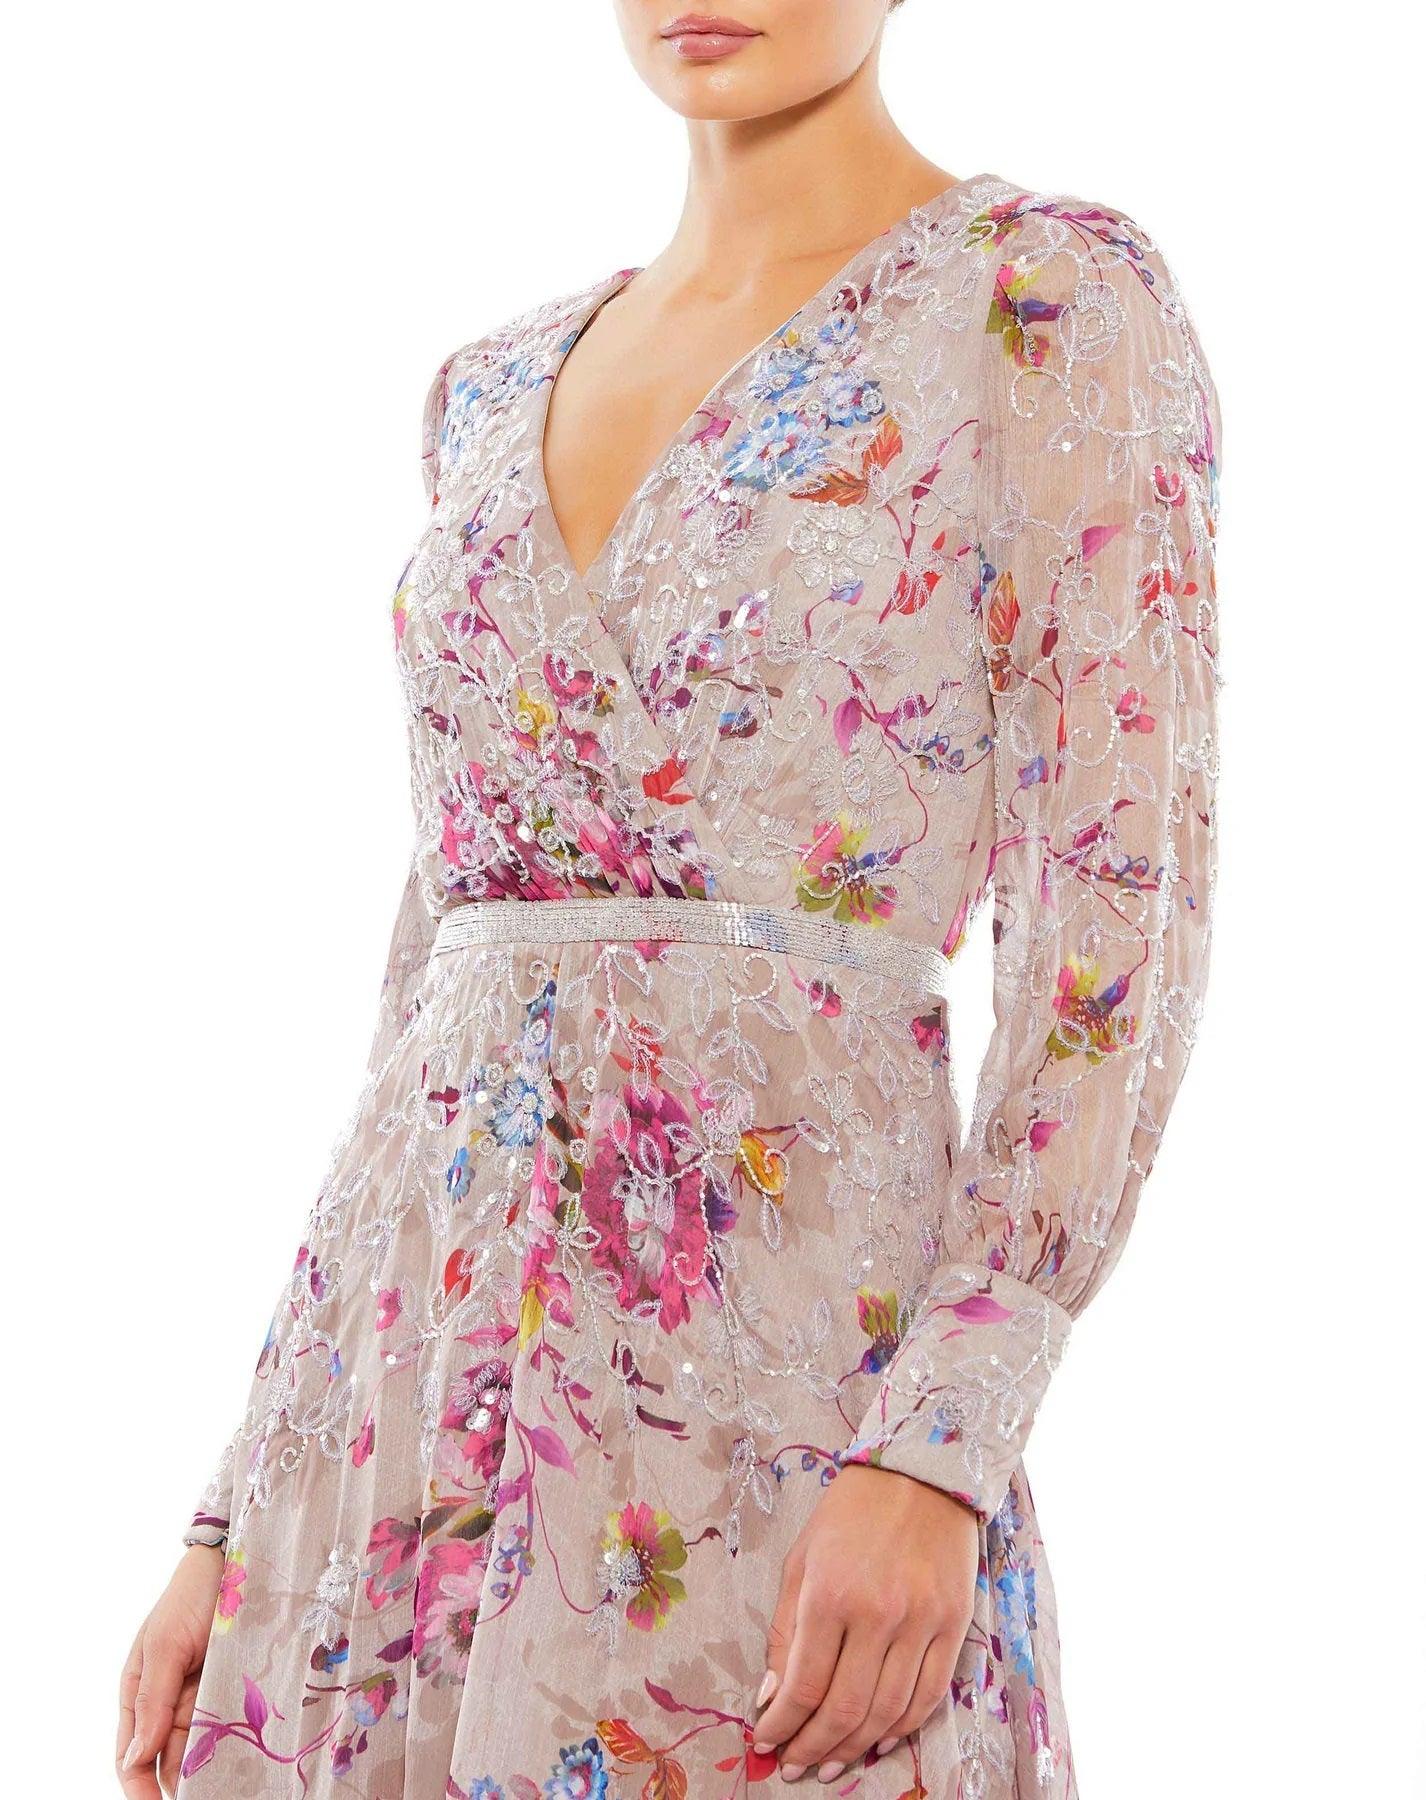 Mac Duggal Long Sleeve Floral Print Midi Dress 9147 - The Dress Outlet